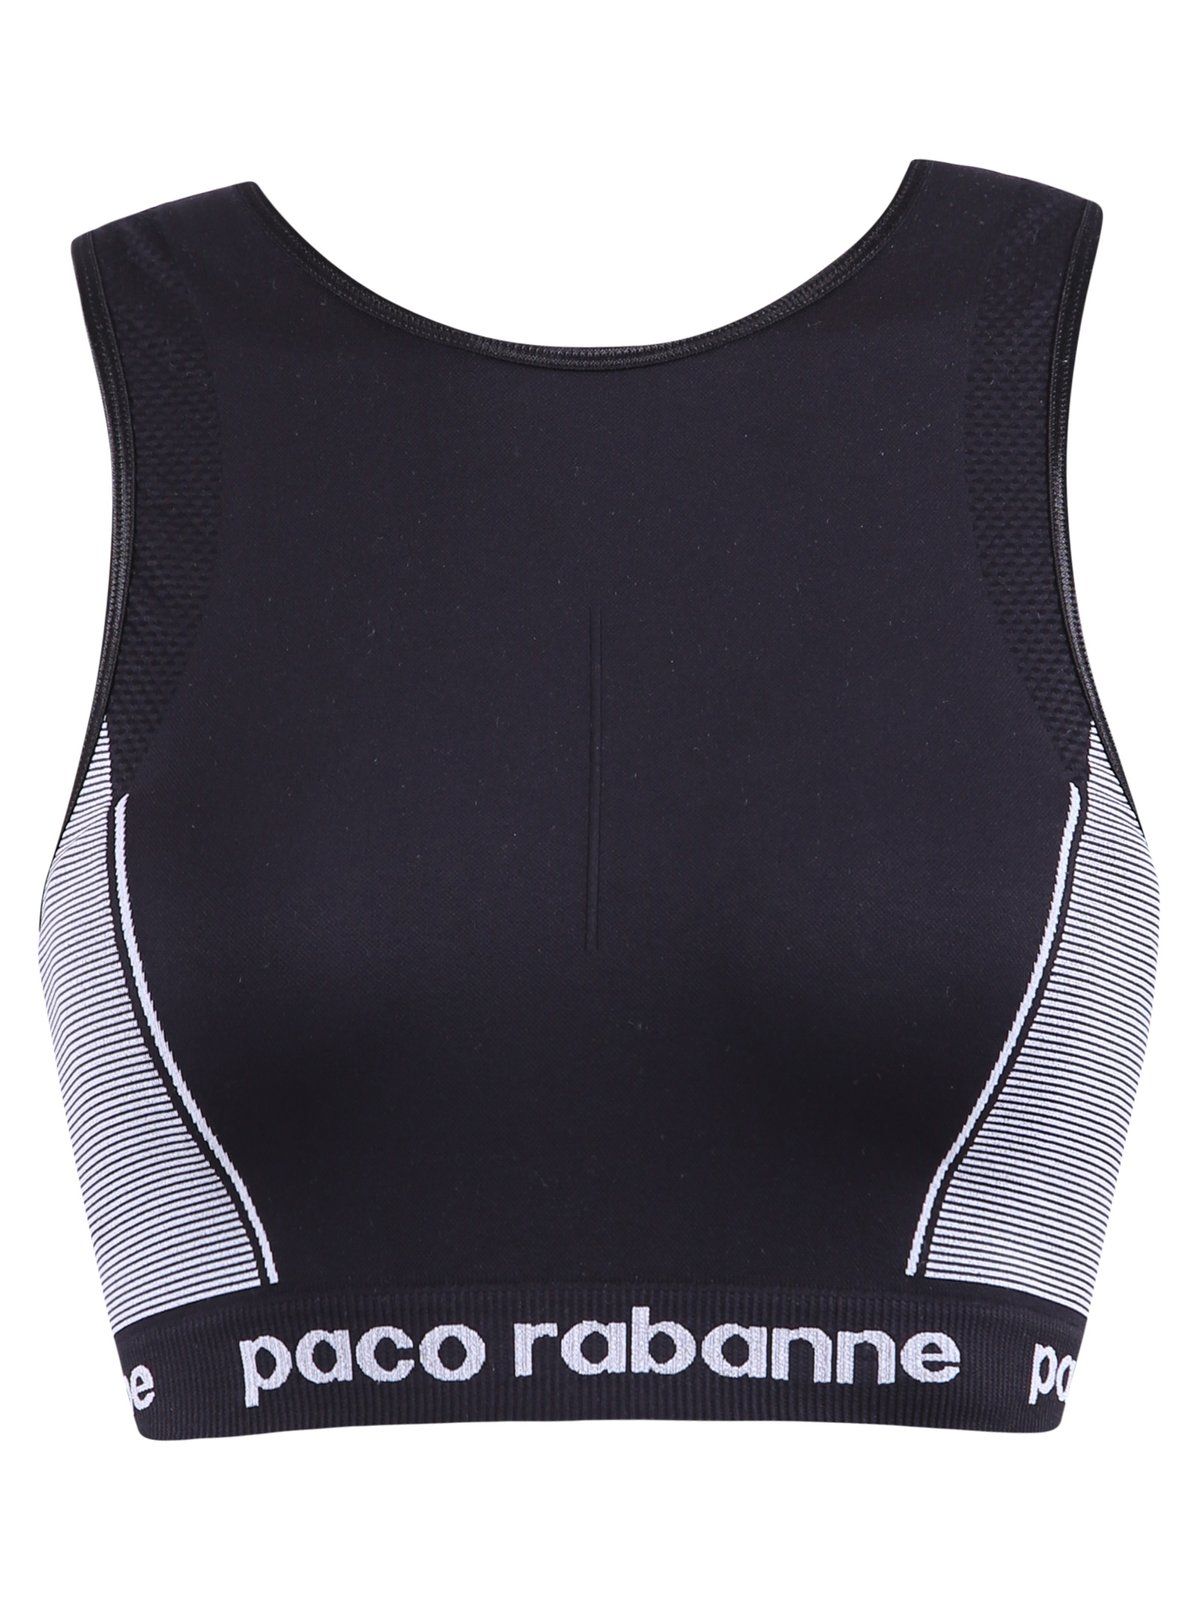 Paco Rabanne Logo Band Stretch Sports Bra | Cettire Global